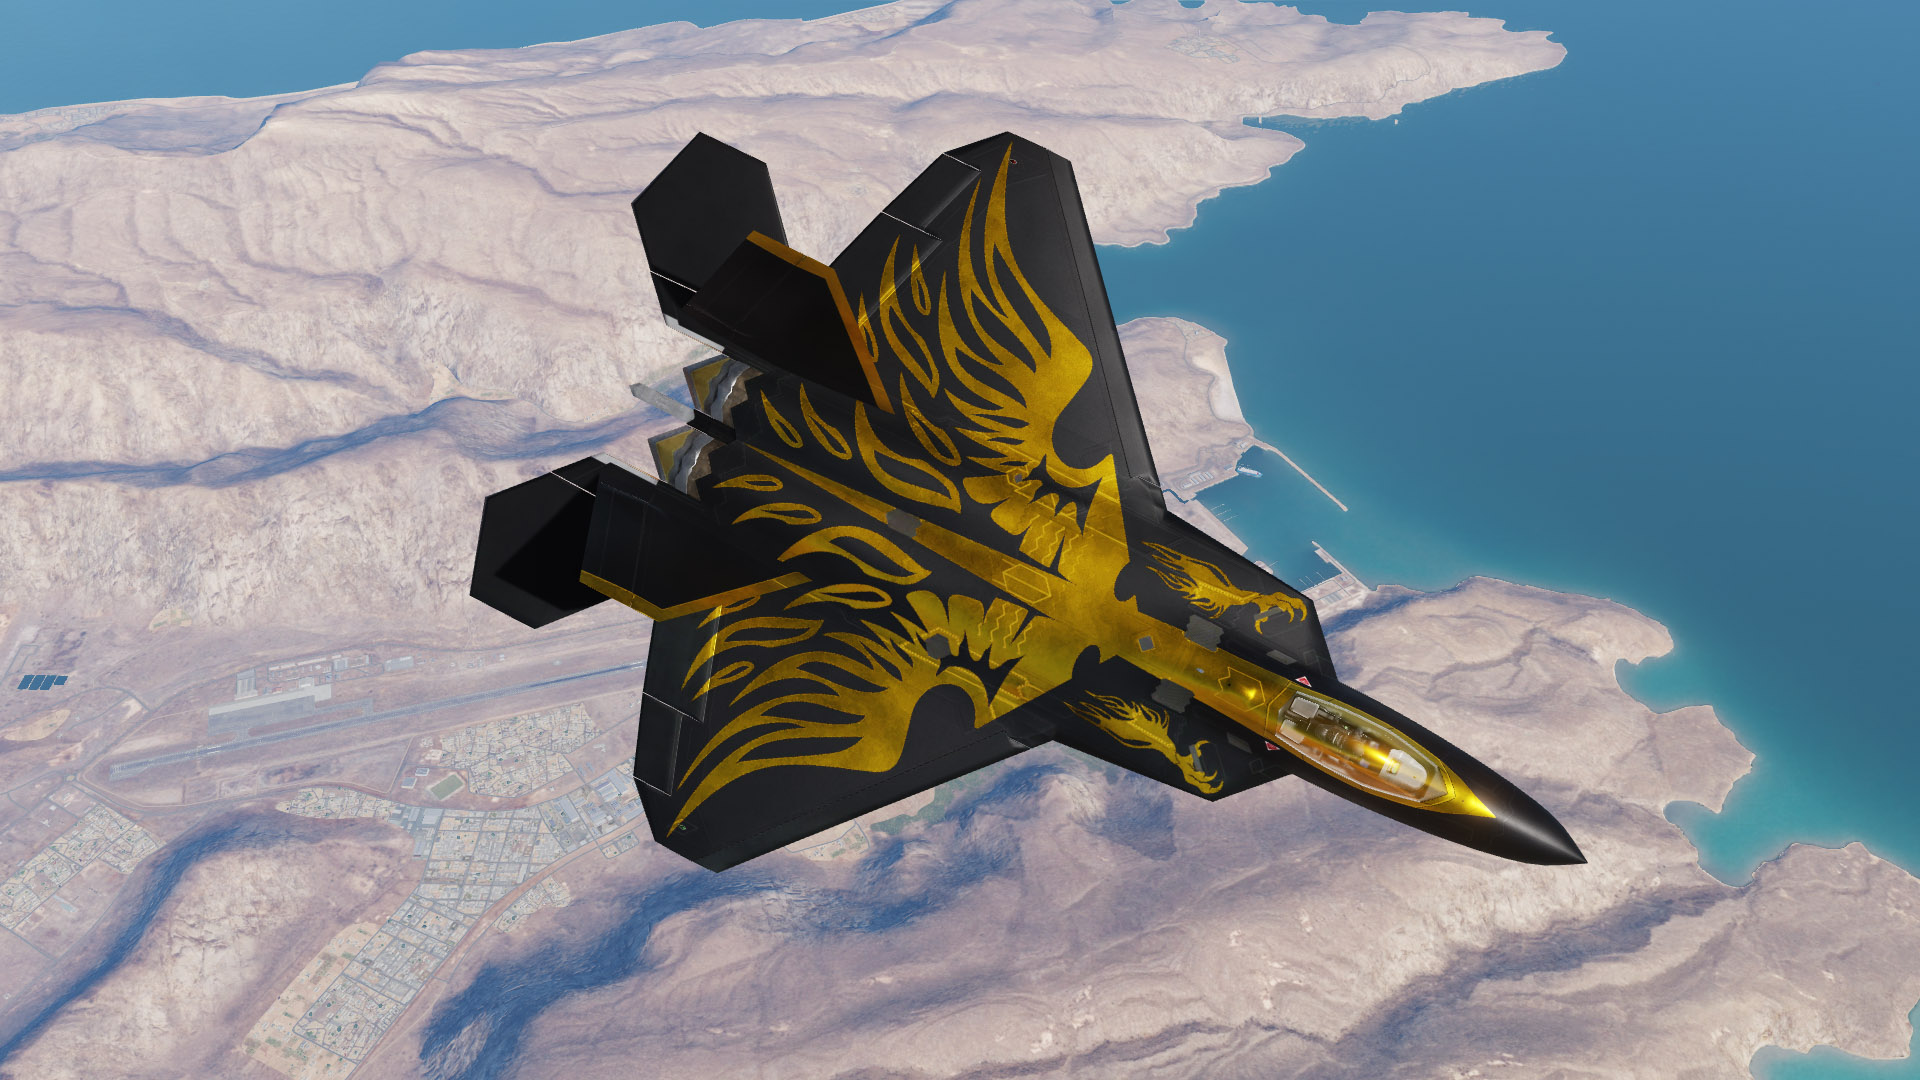 104th Phoenix "Apex Predator" for F-22a by Grinnelli.